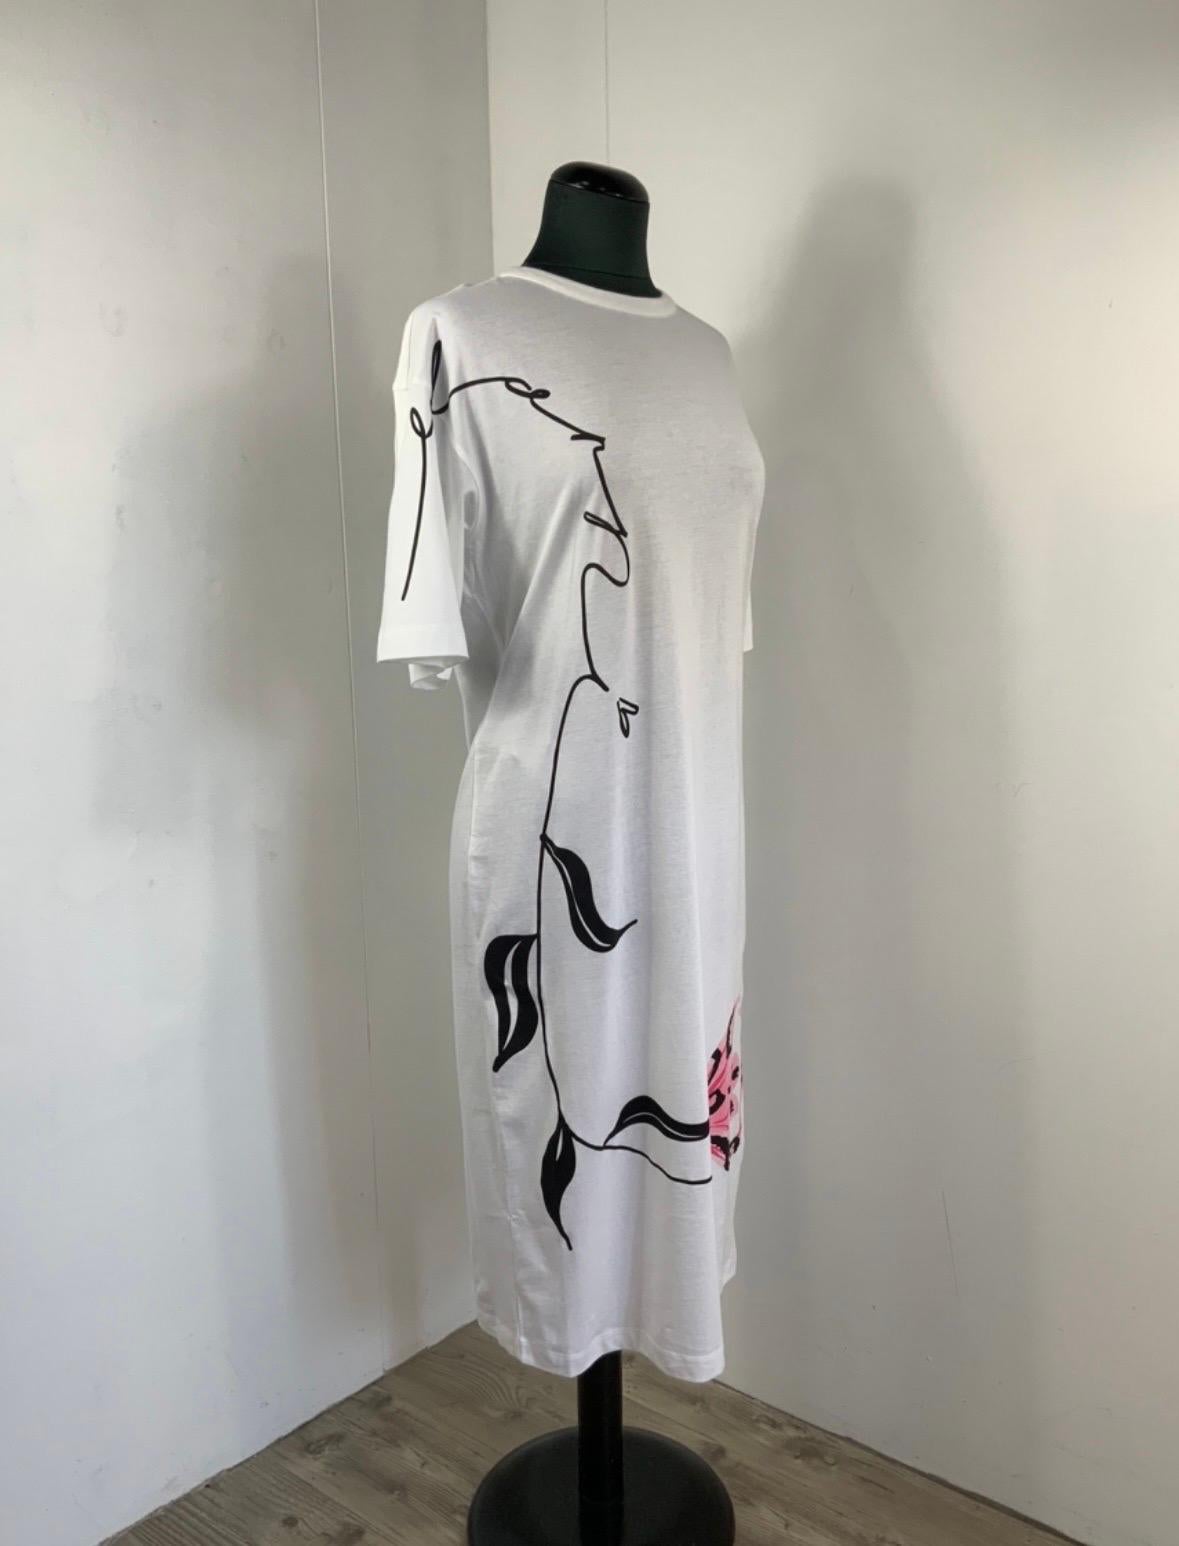 MARNI T-SHIRT DRESS.
100% Cotton.
 Italian size 38.
 Shoulders 52cms
 Bust 50cm
 Length 110cm
 New, with original tag.